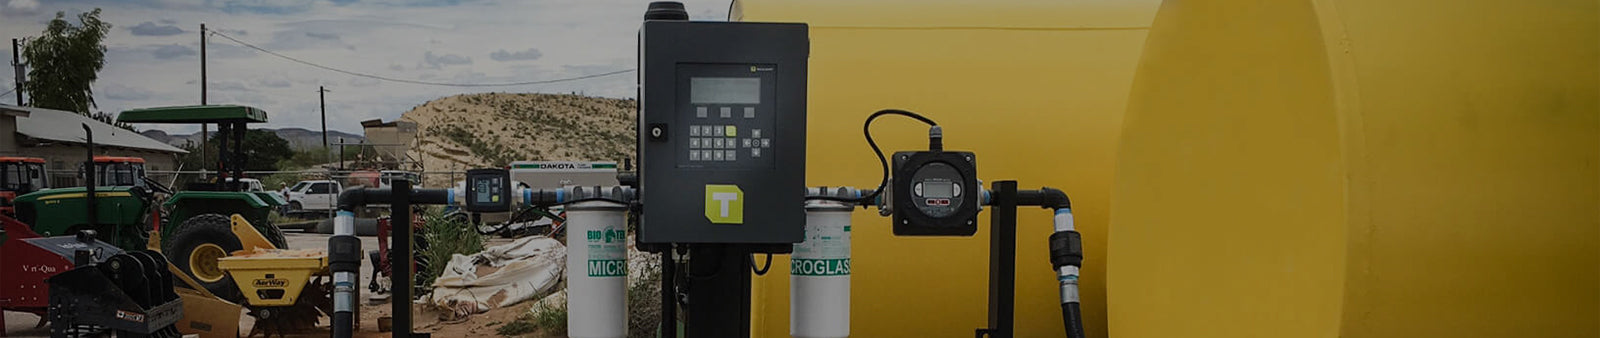 Tecalemit Fuel Management System